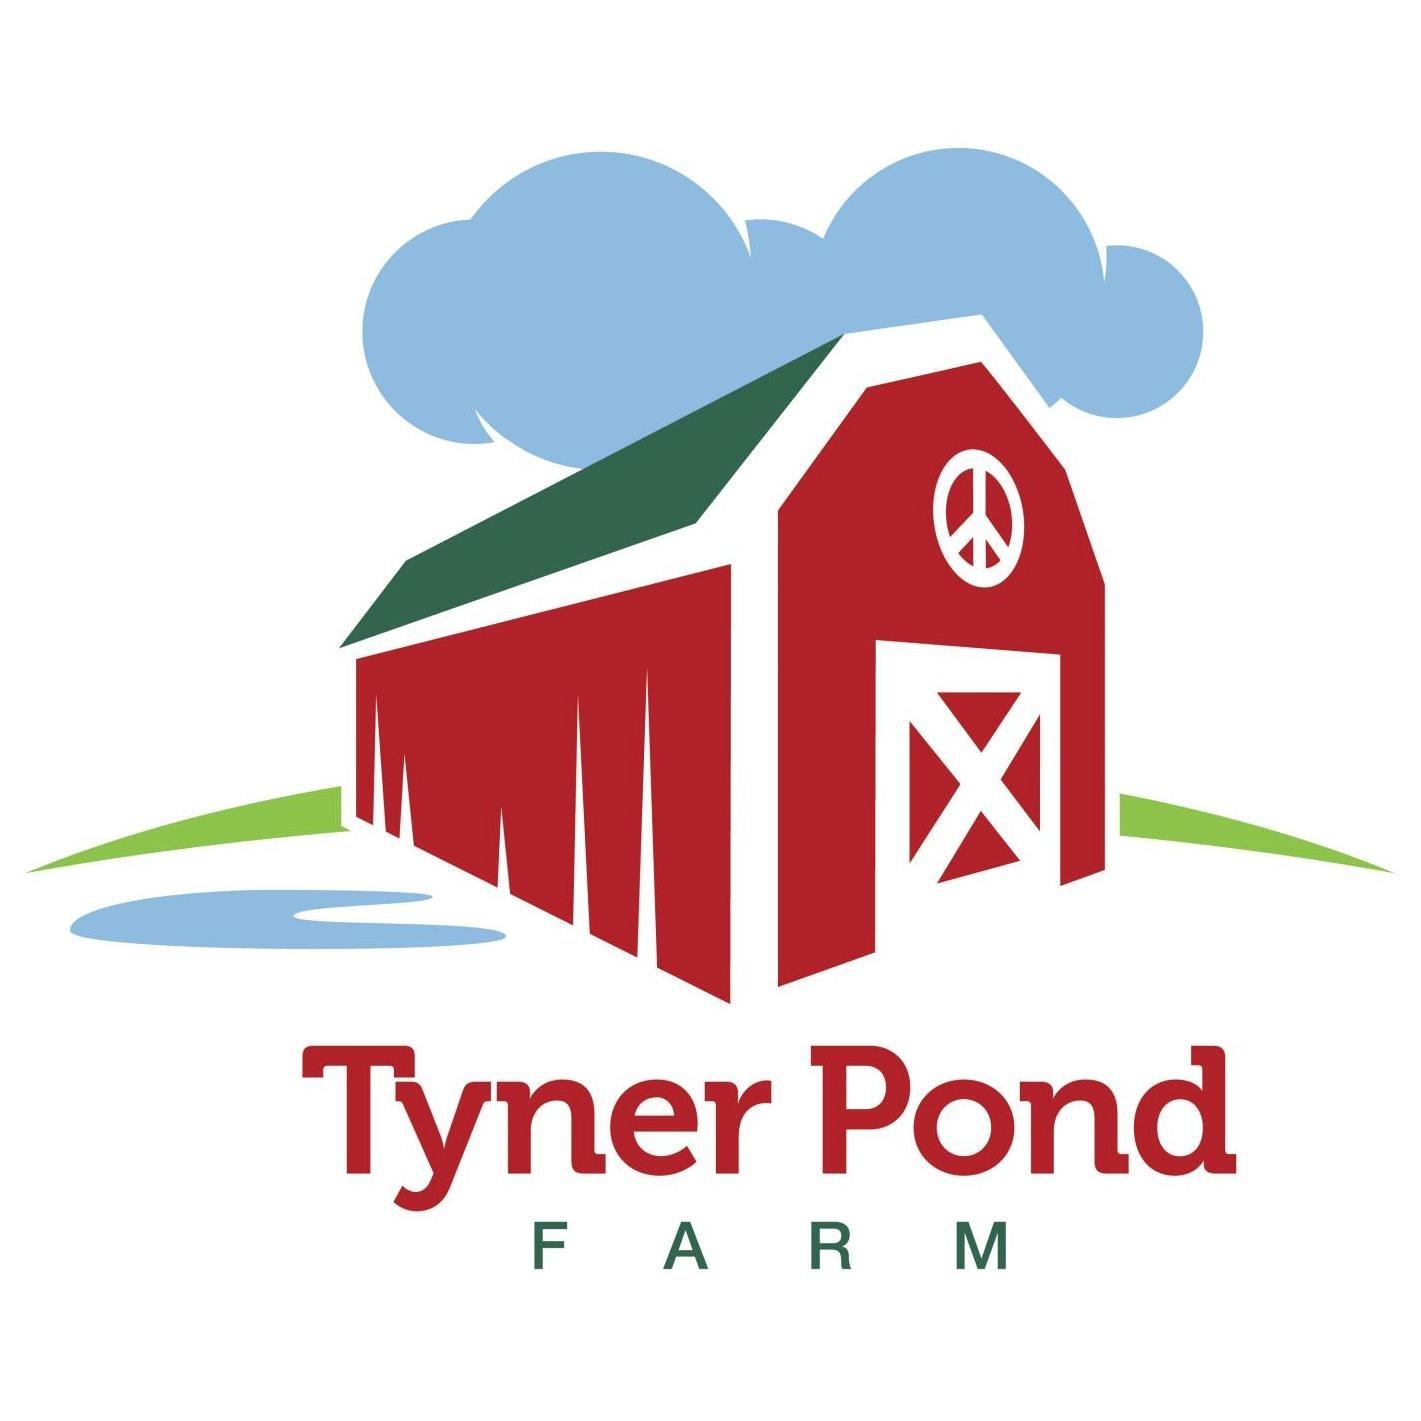 Tyner Pond Farm logo